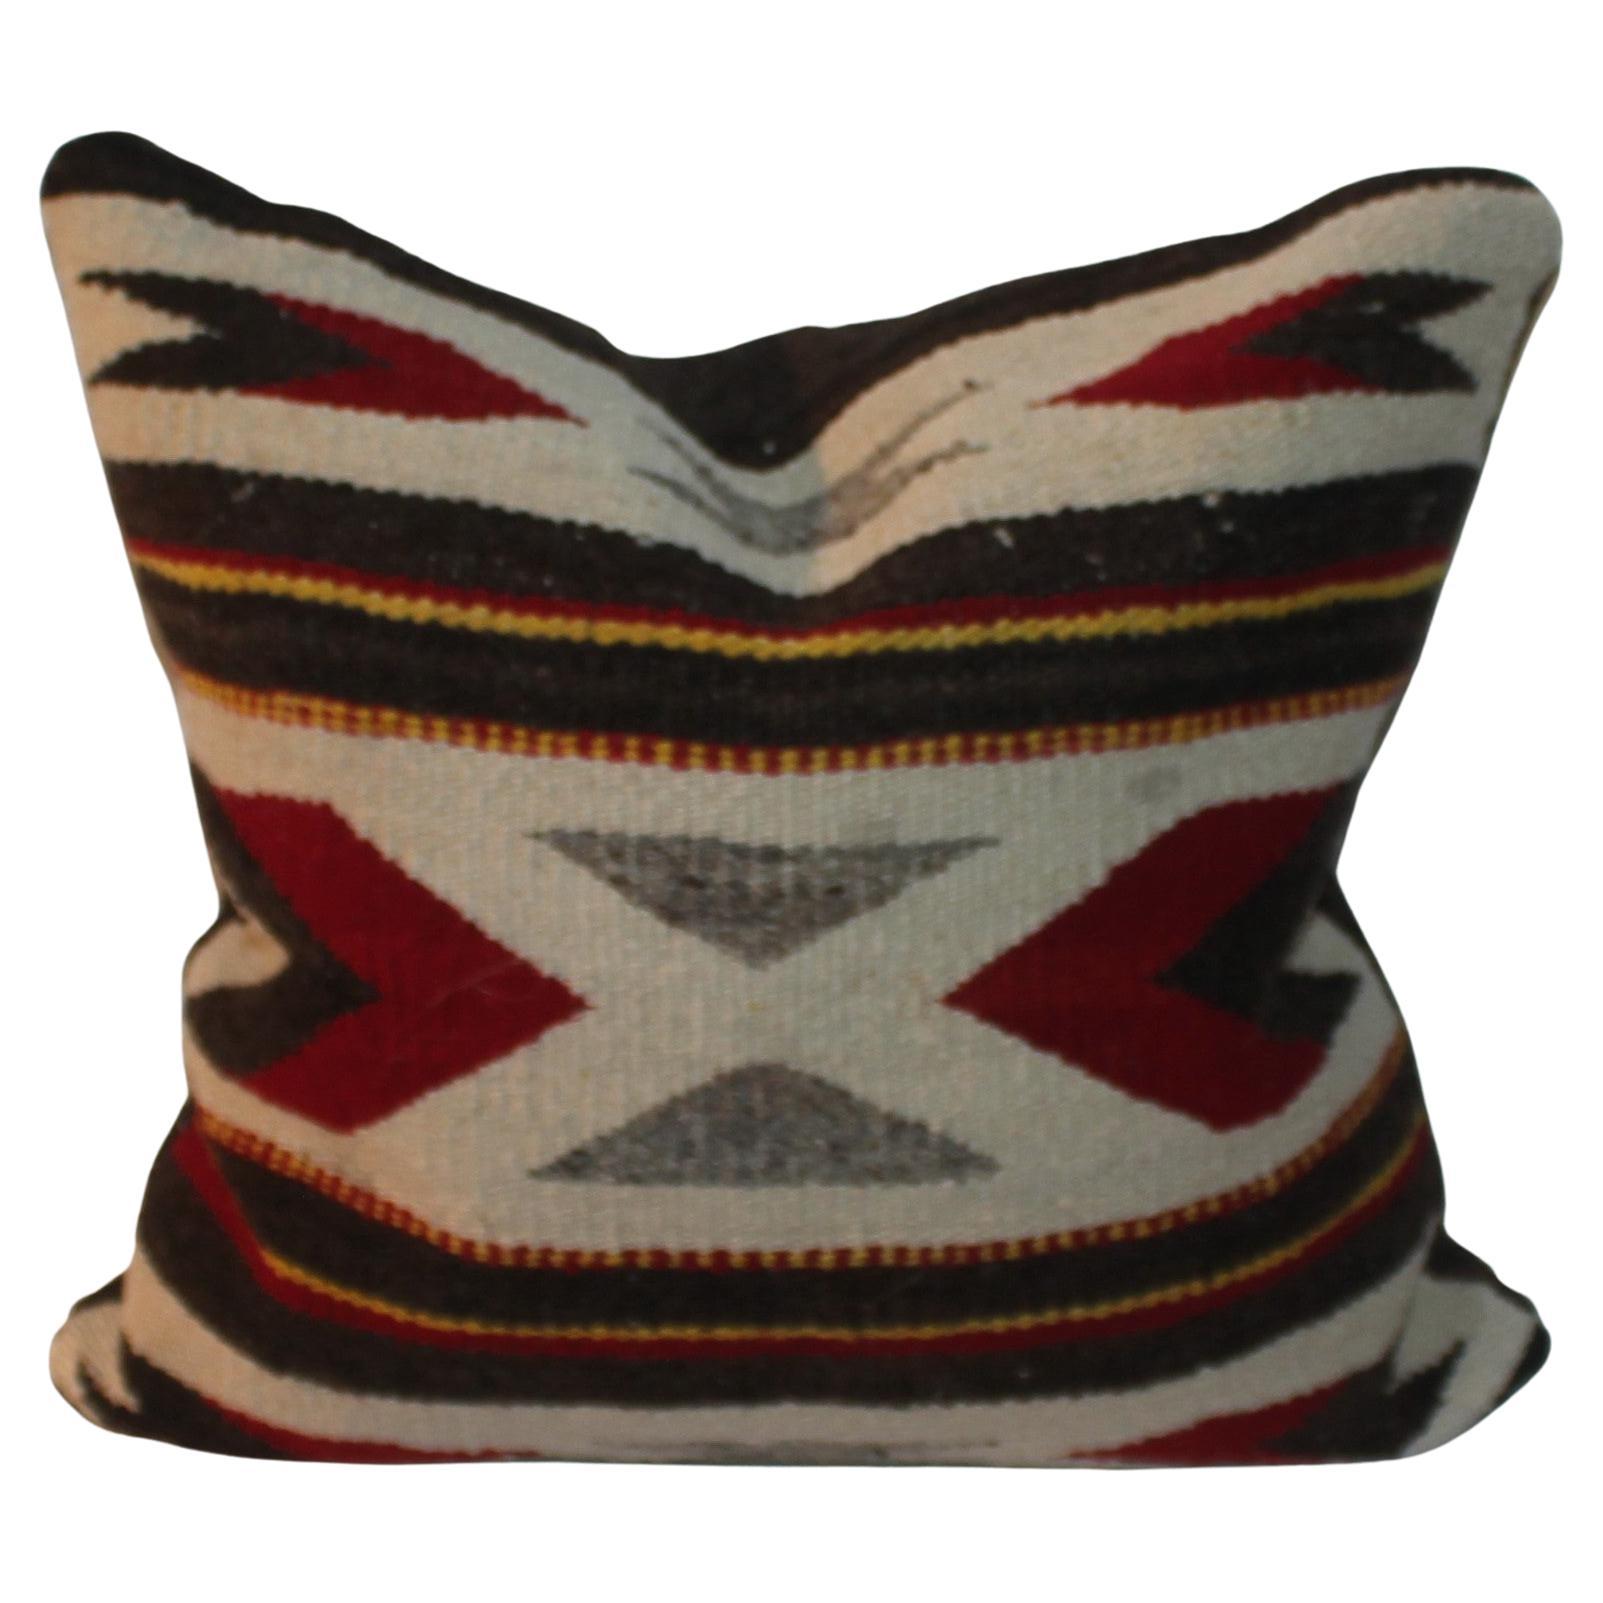 Navajo Indian Weaving Pillow